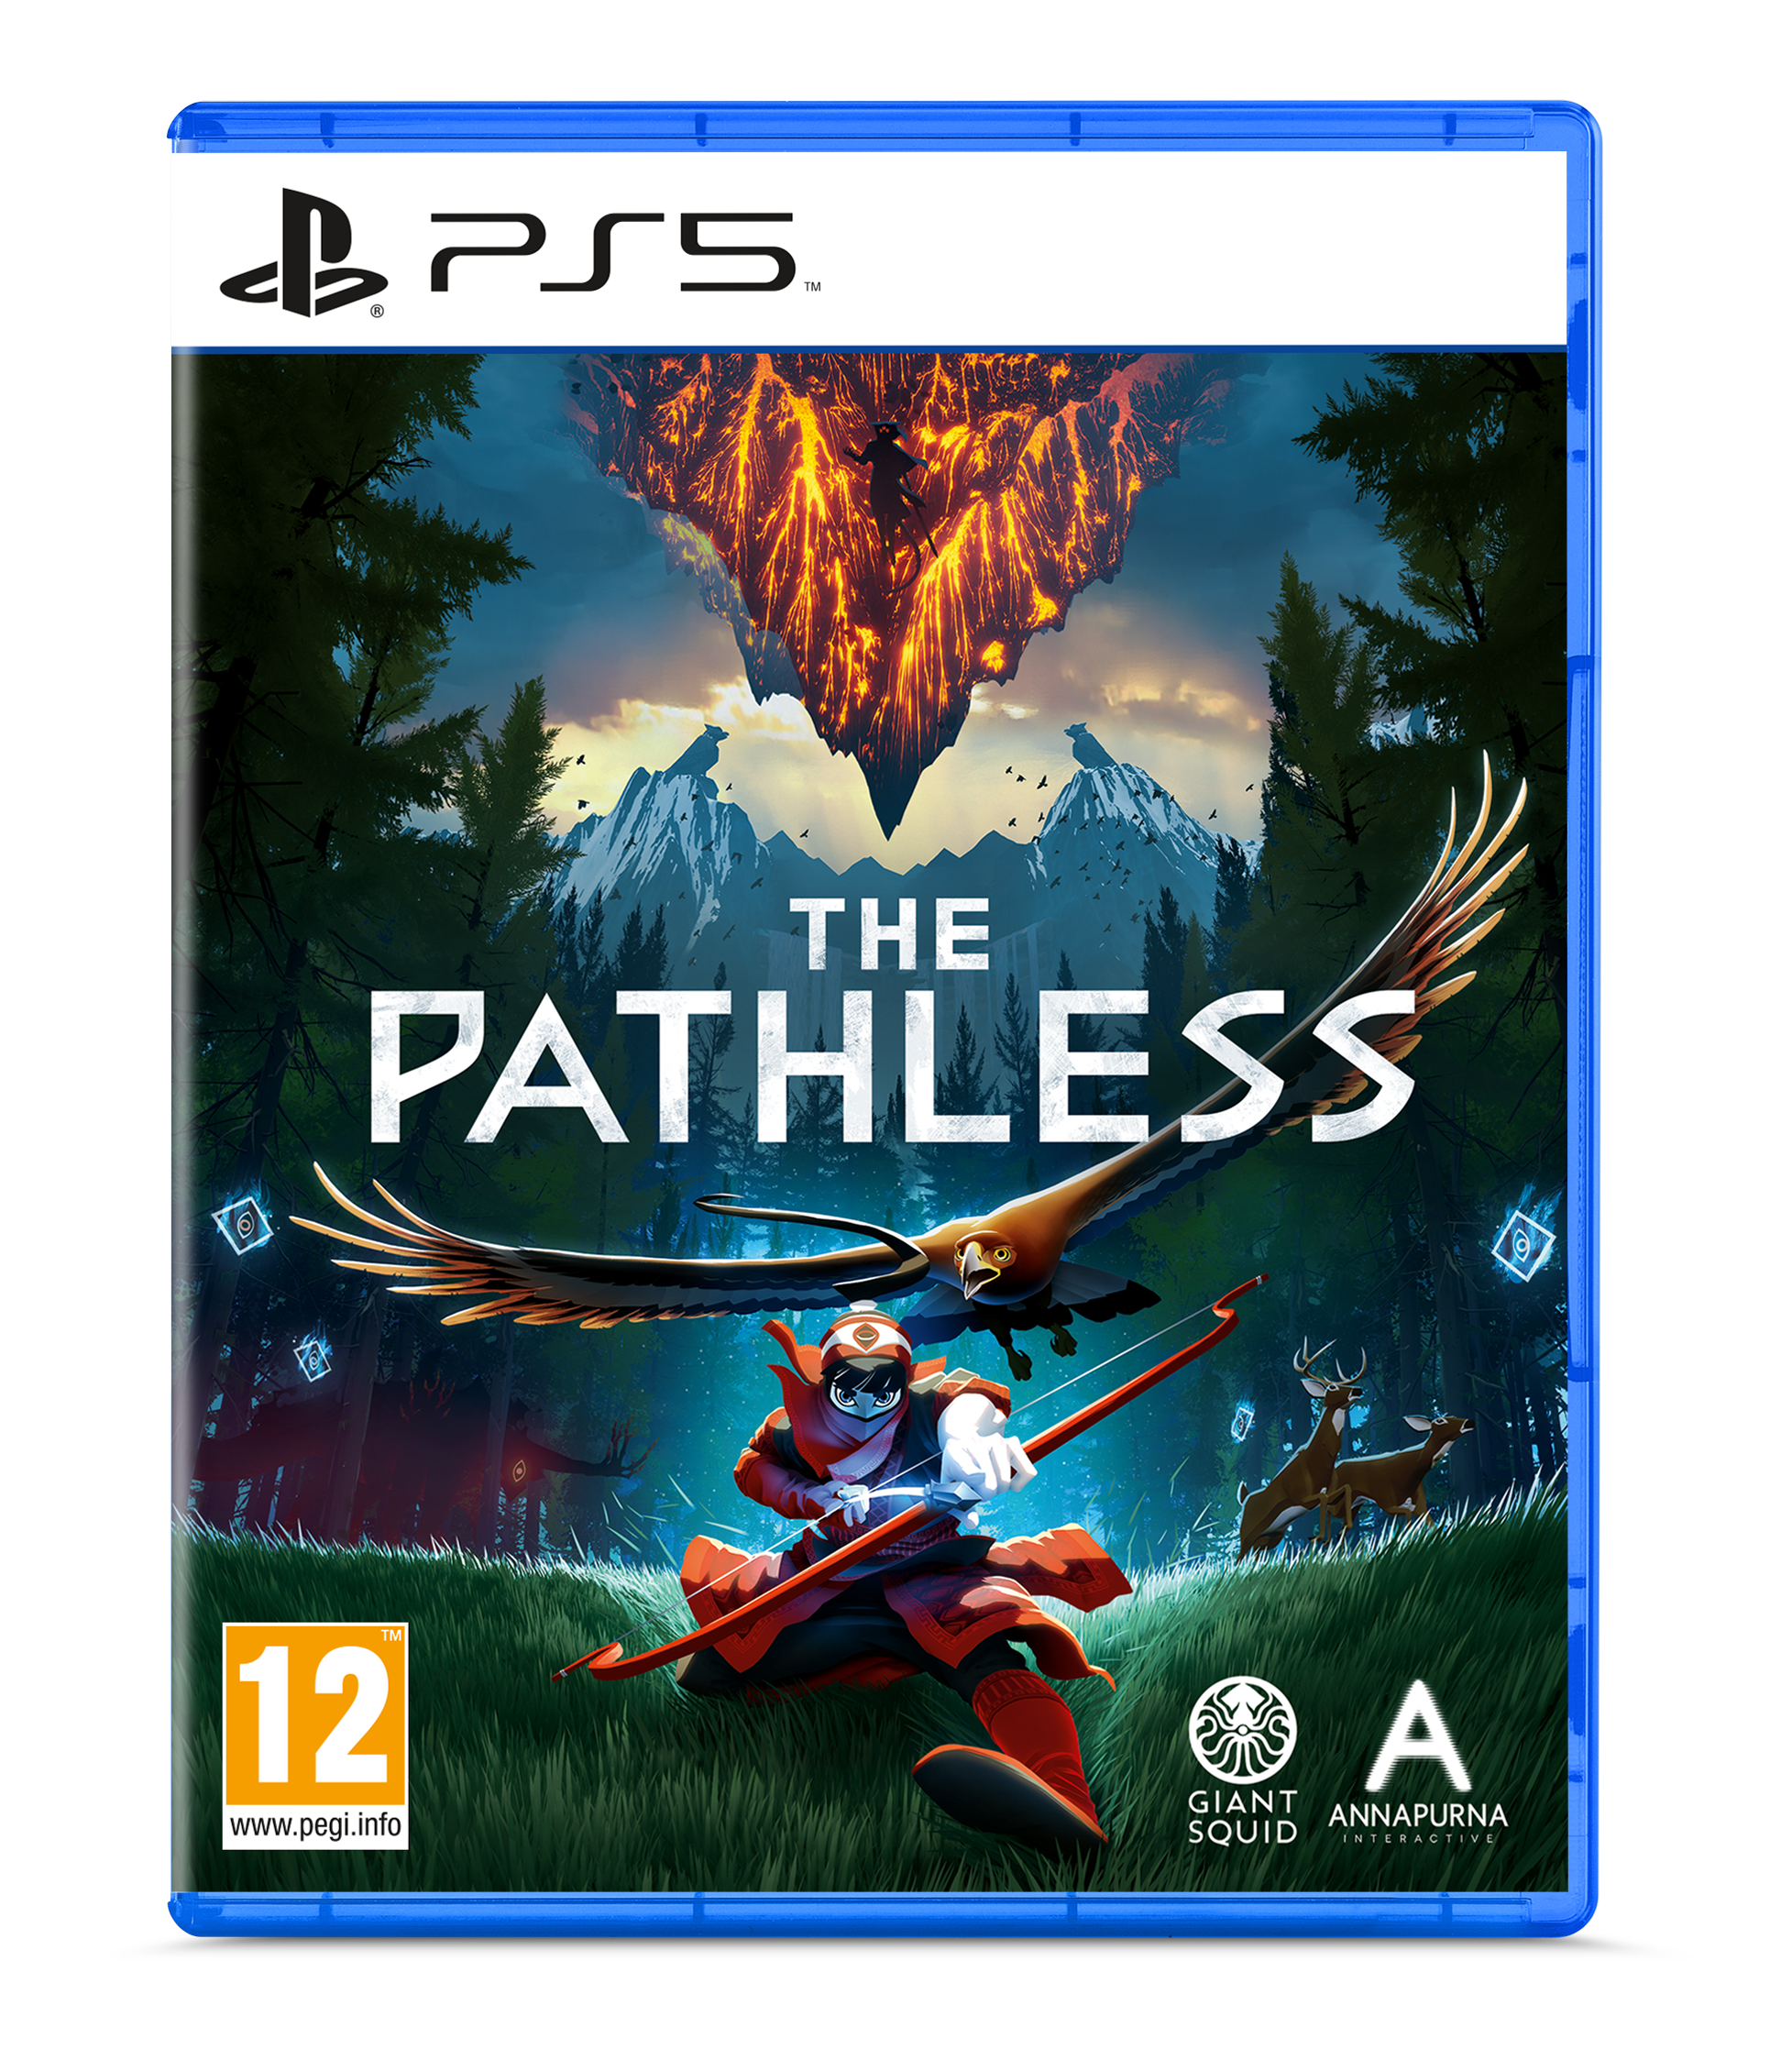 pathless path